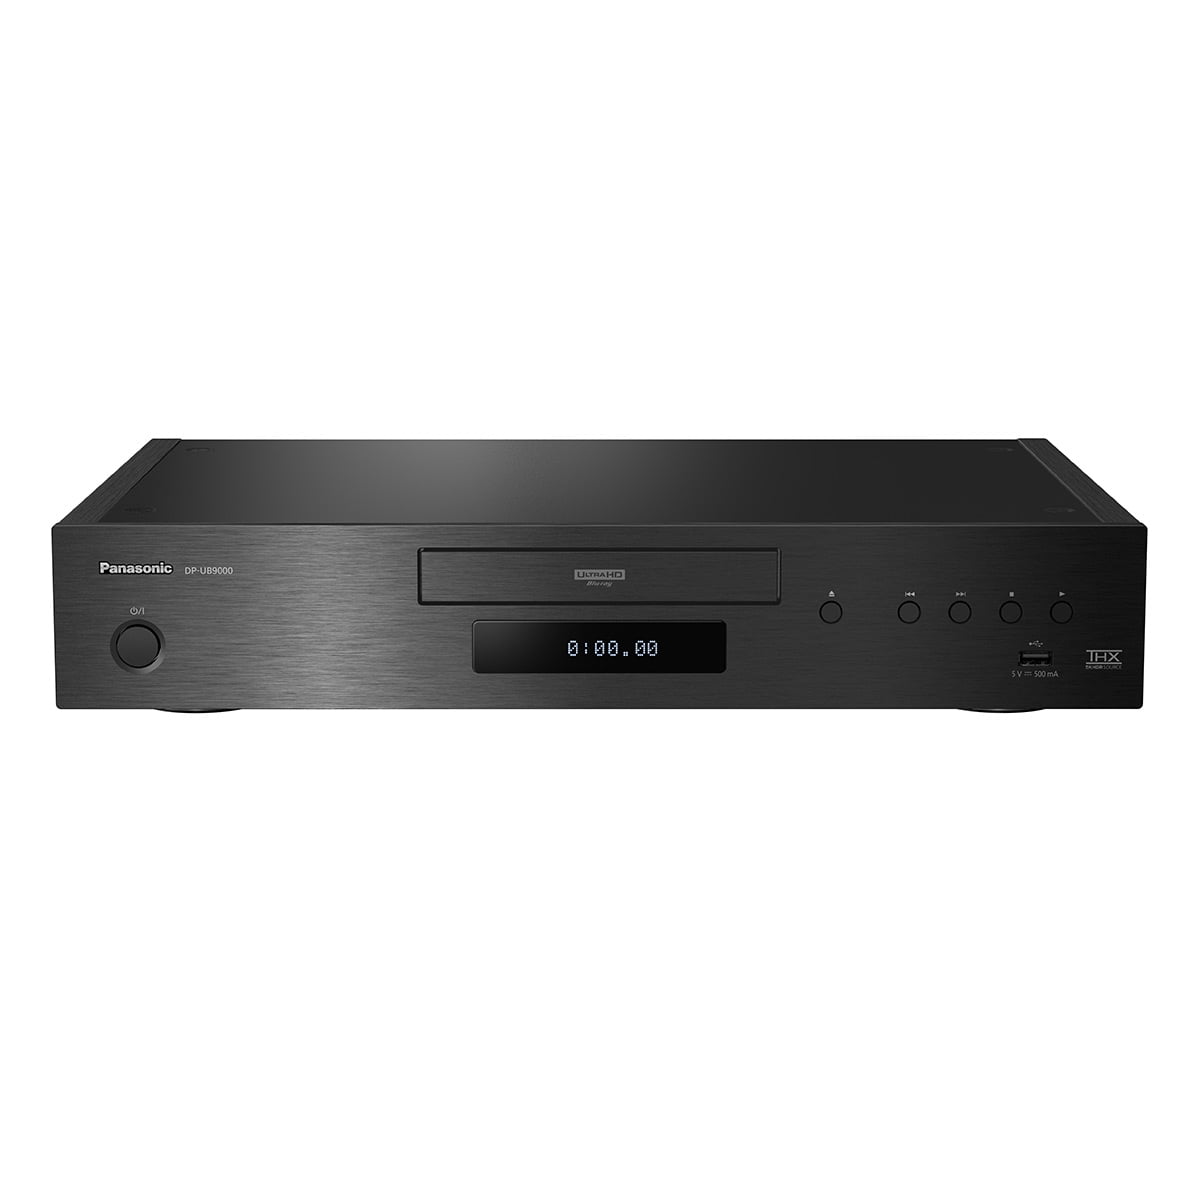 LECTEUR DVD BLU-RAY Multiregion Sony BDP-S360 FULL HD USB HDMI